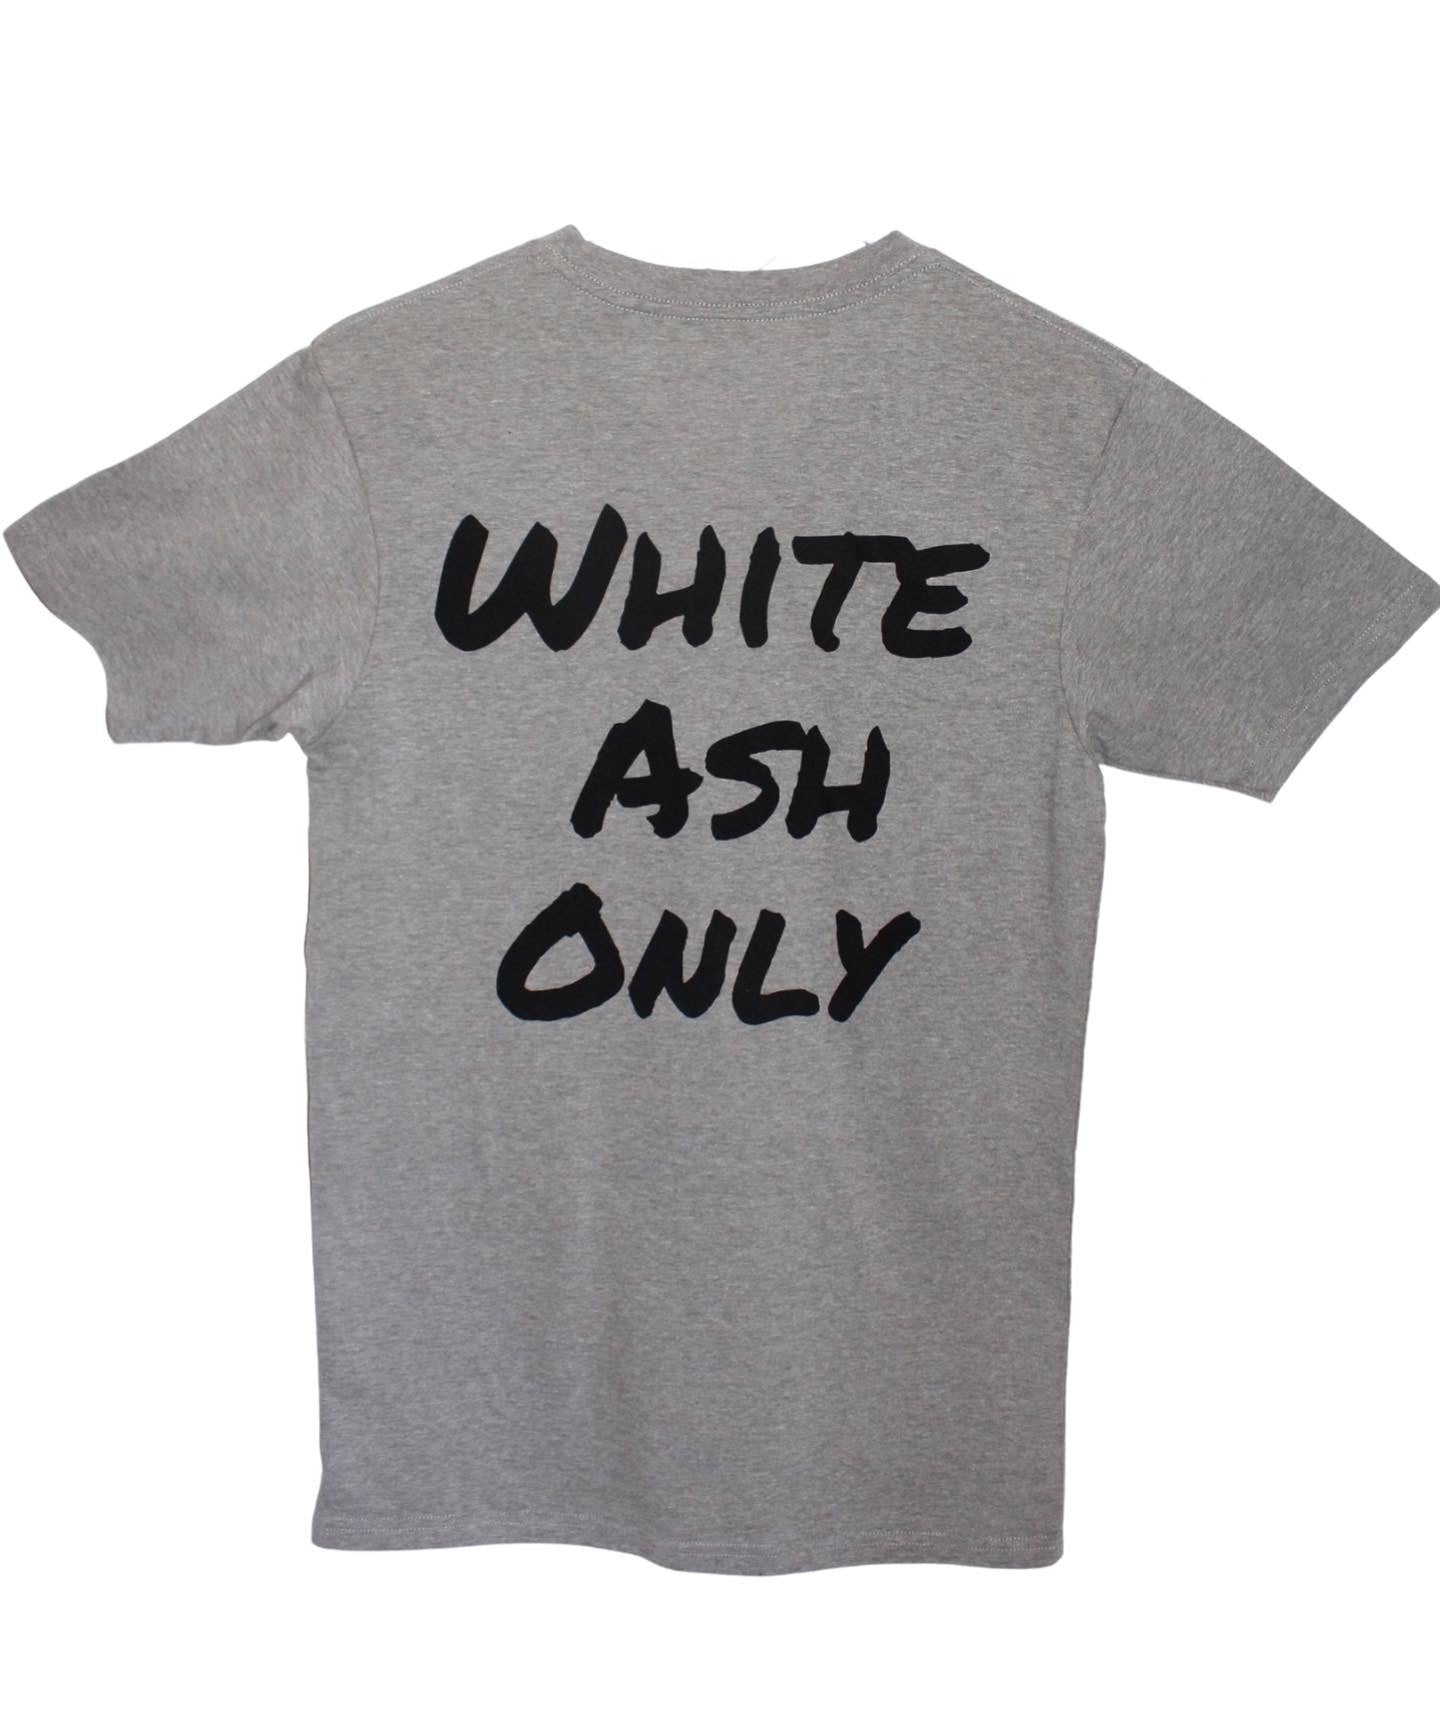 White Ash Only Unisex Heavyweight Shirt